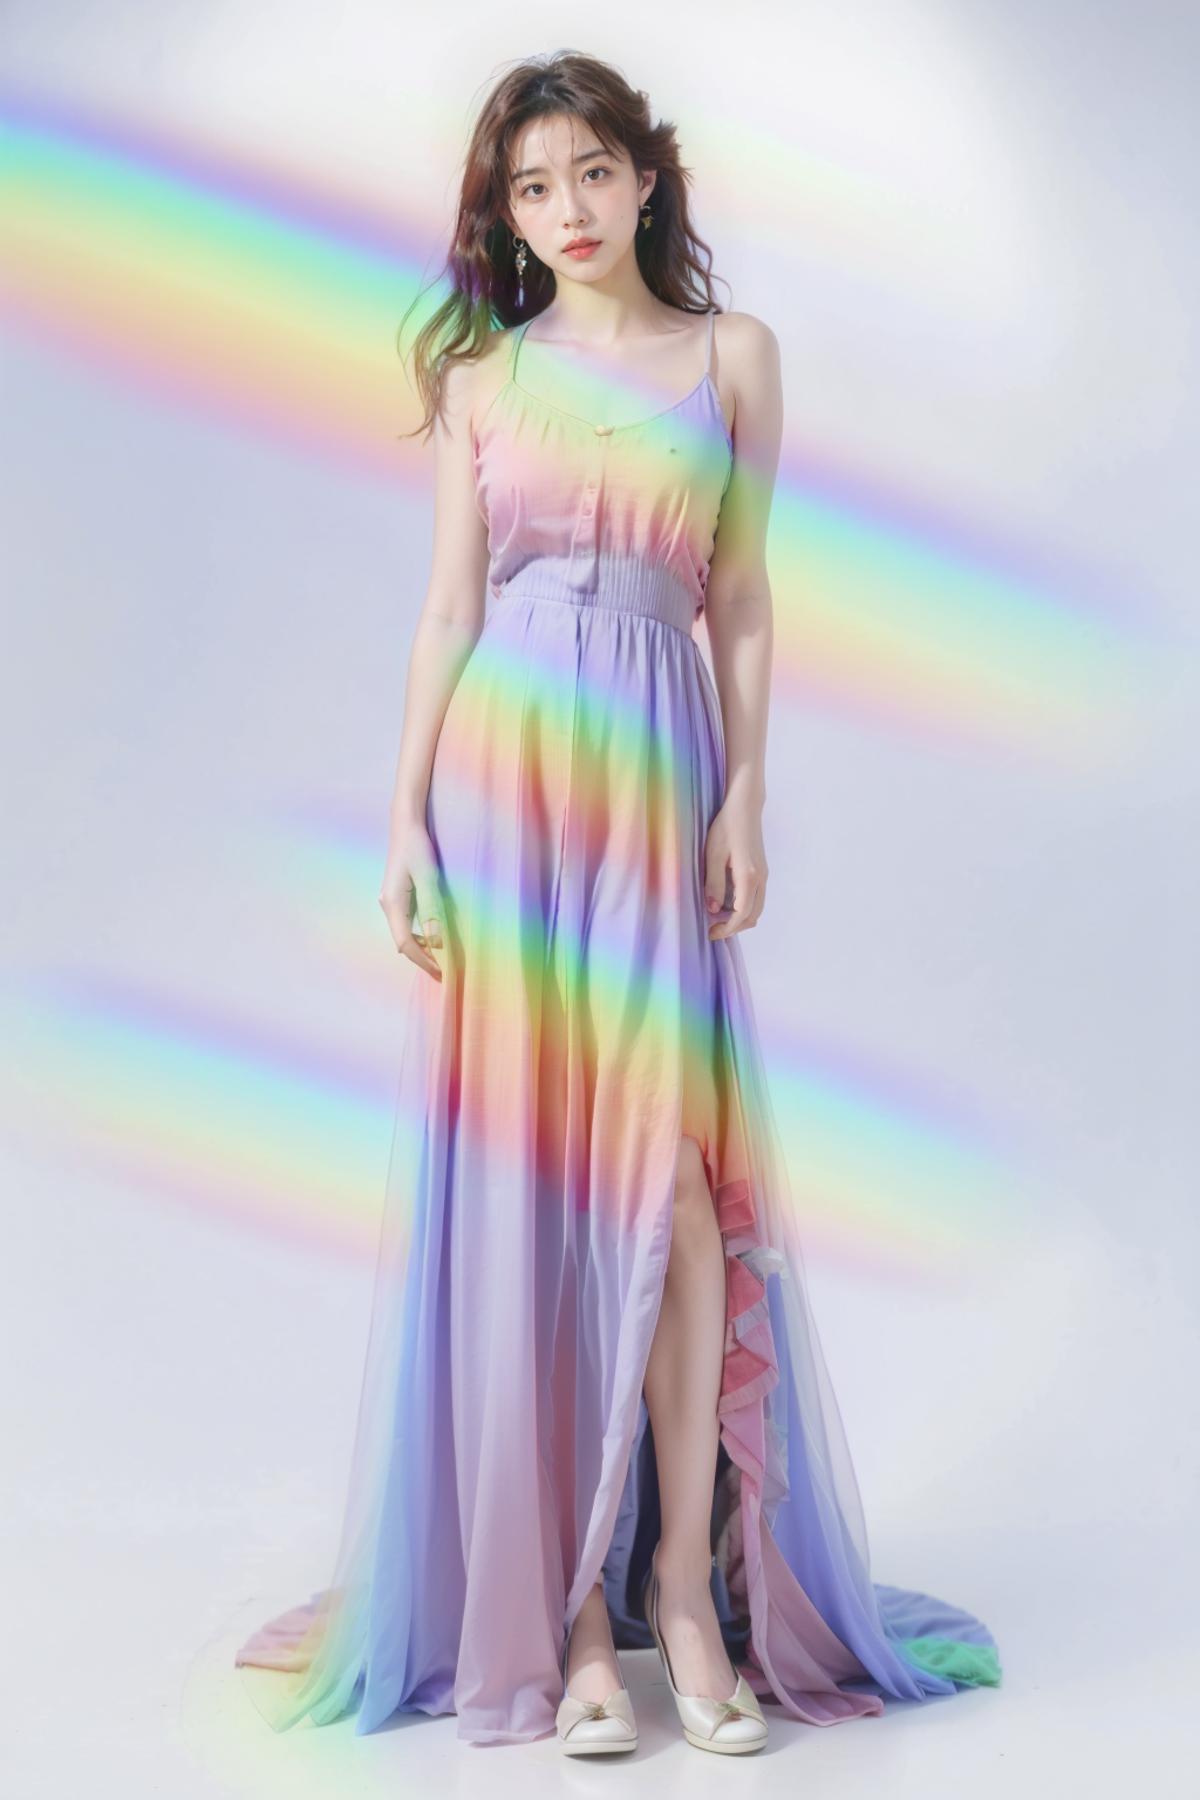 Rainbow-彩虹光晕 image by SweetCake